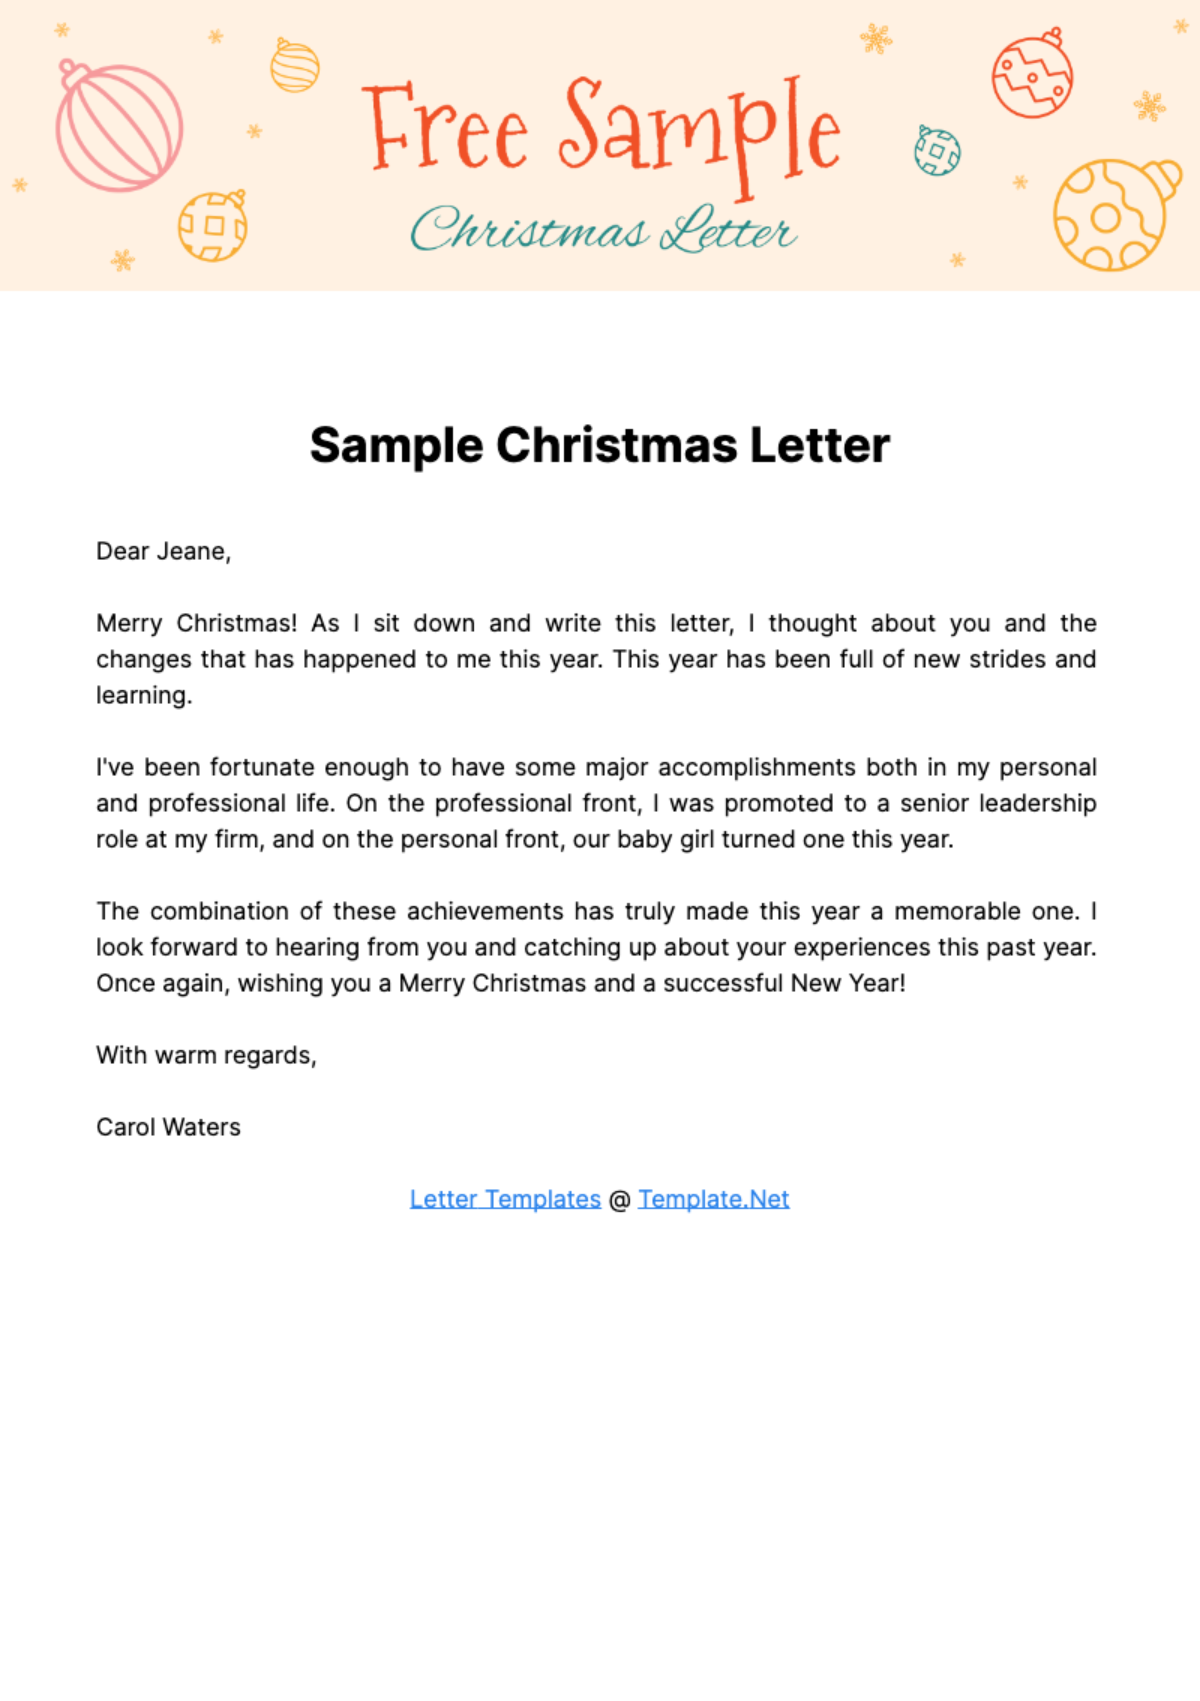 Free Sample Christmas Letter Template